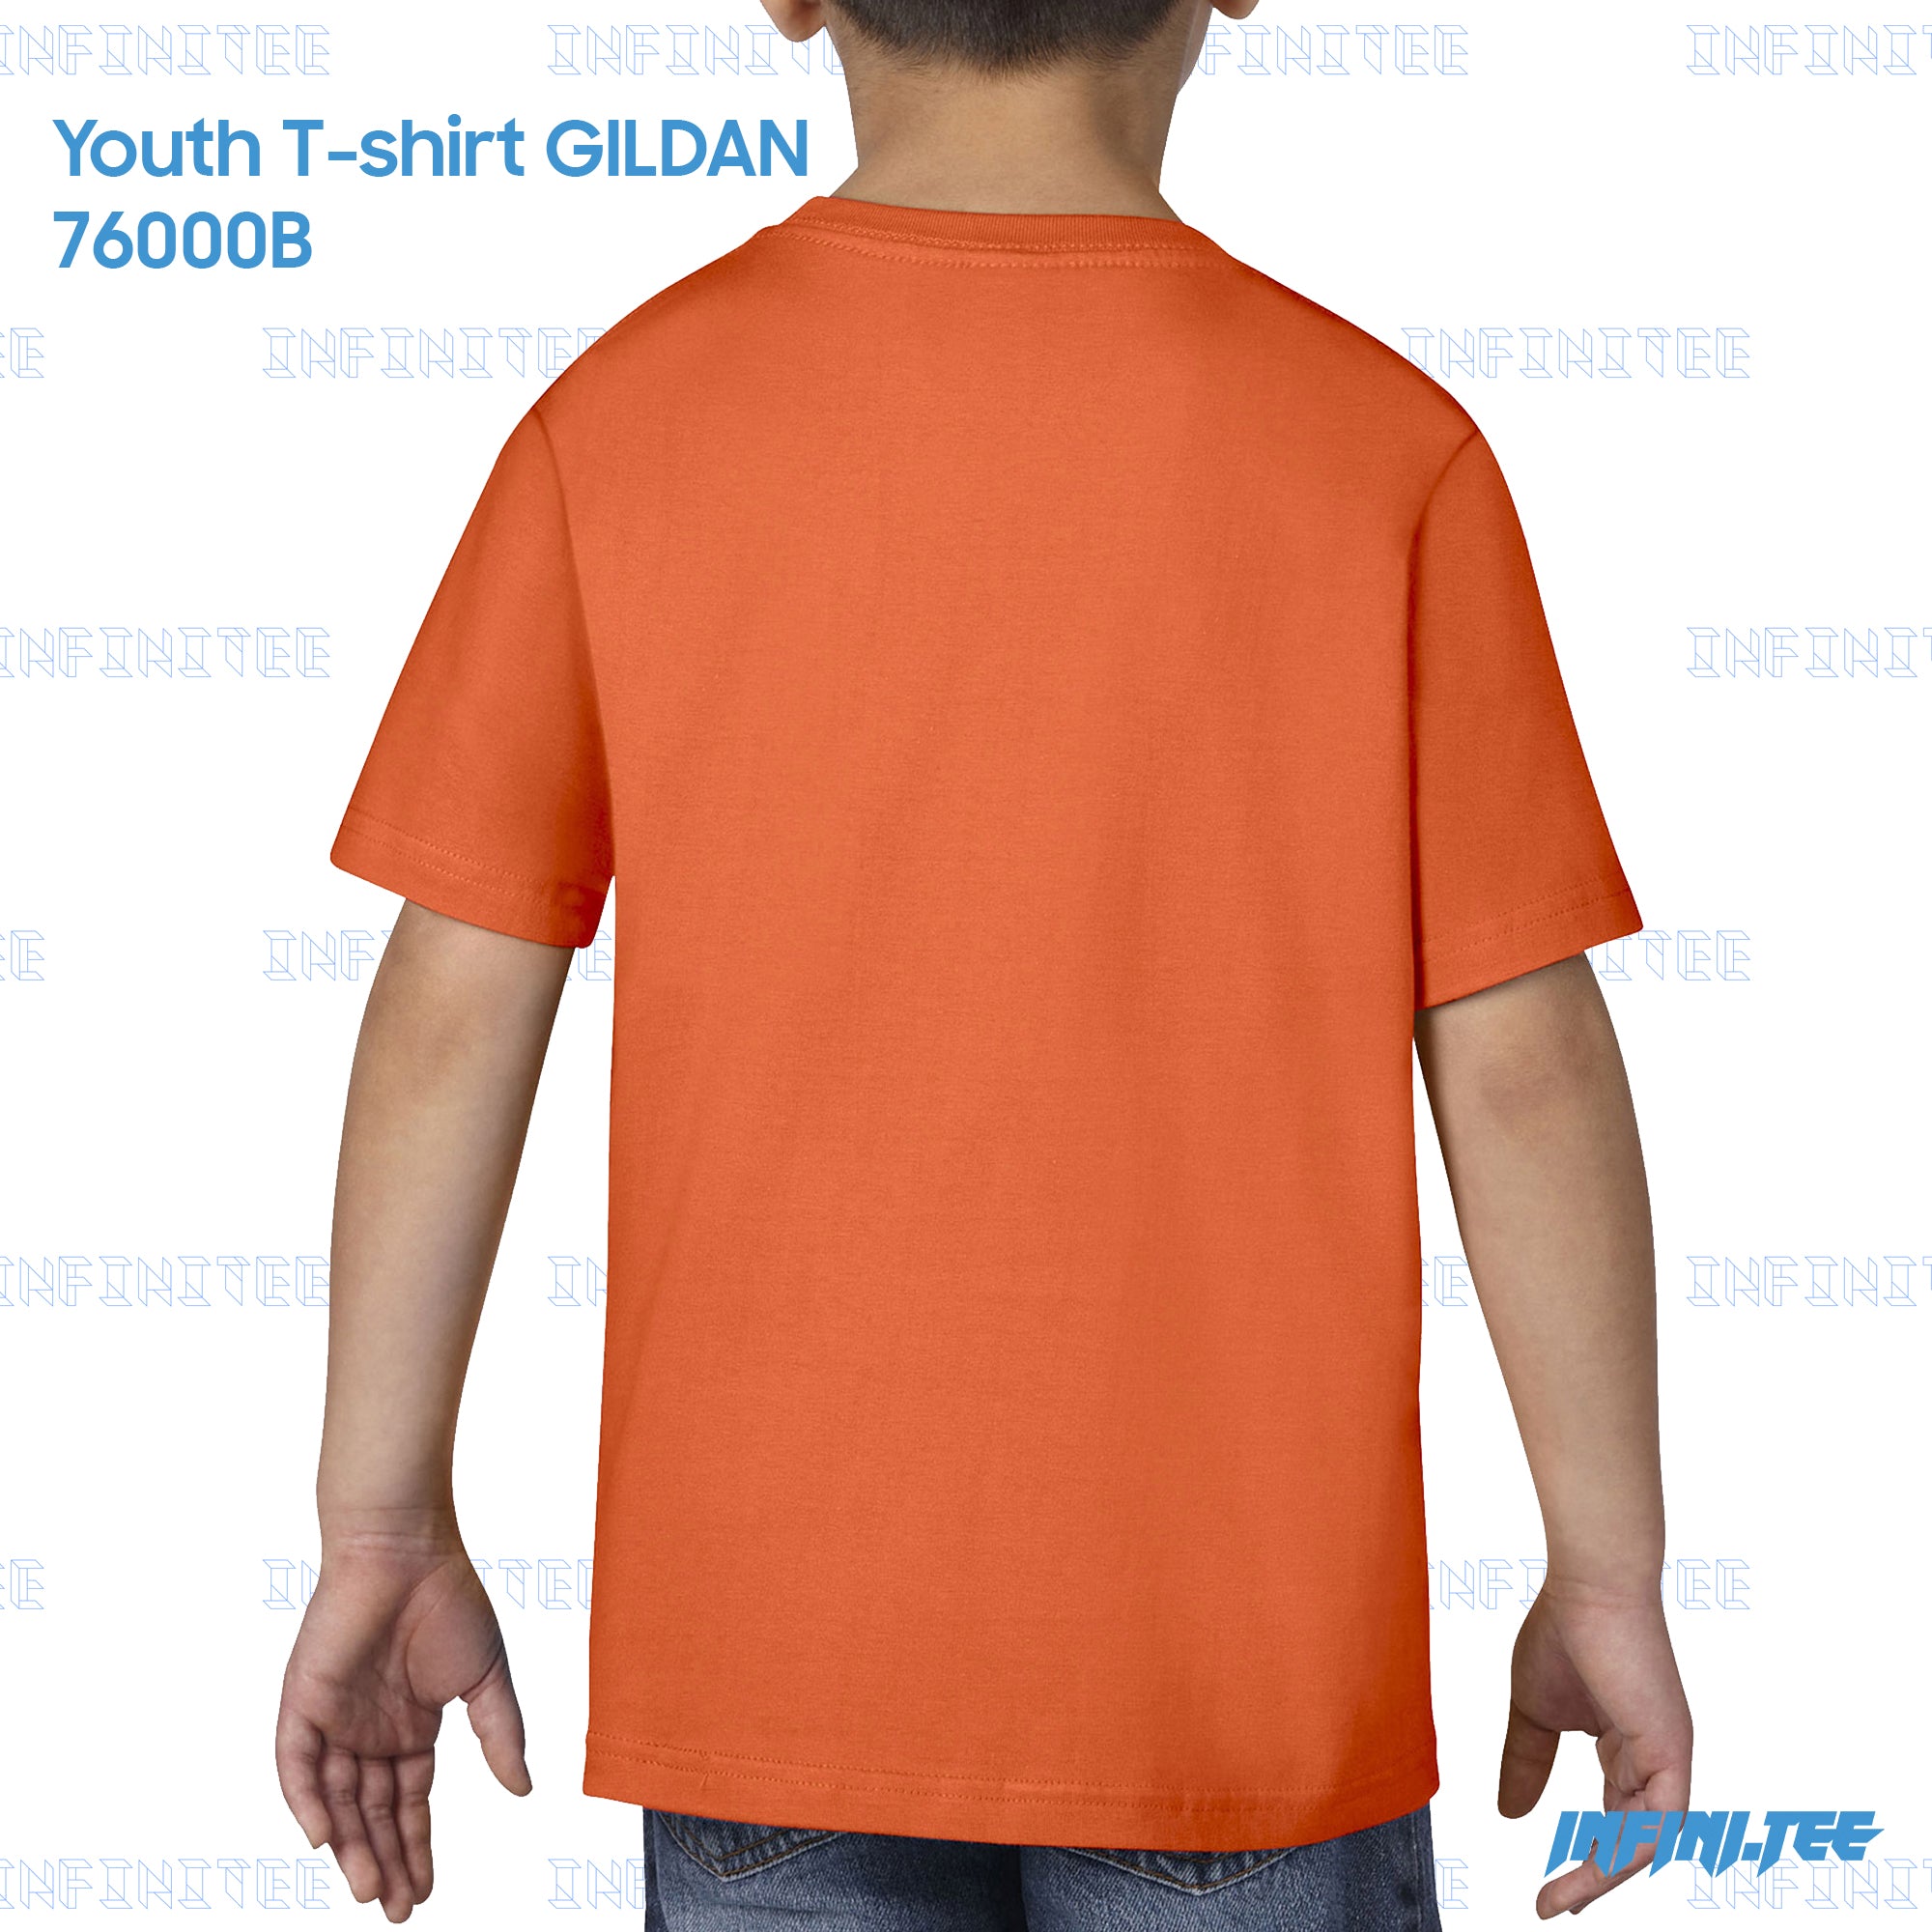 Youth T-shirt 76000B GILDAN - ORANGE